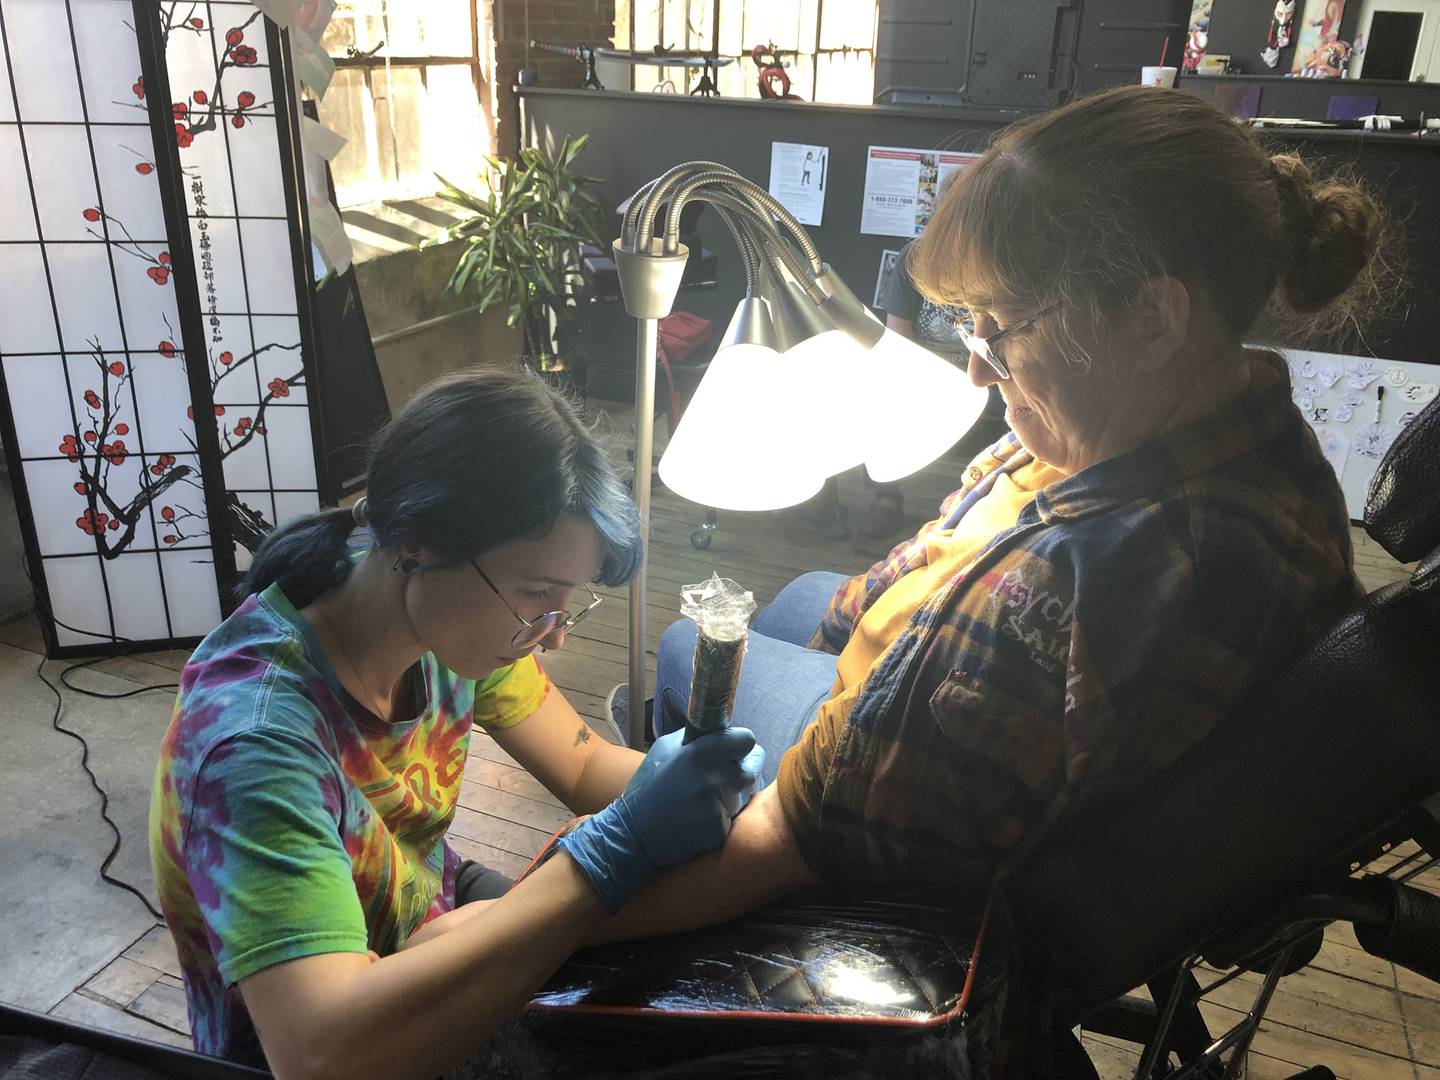 Cat, one of Irezumi's artists, works on tattooing customer Theresa Love at Irezumi Tattoo Parlor in Peru on Saturday, Oct. 29, 2022.